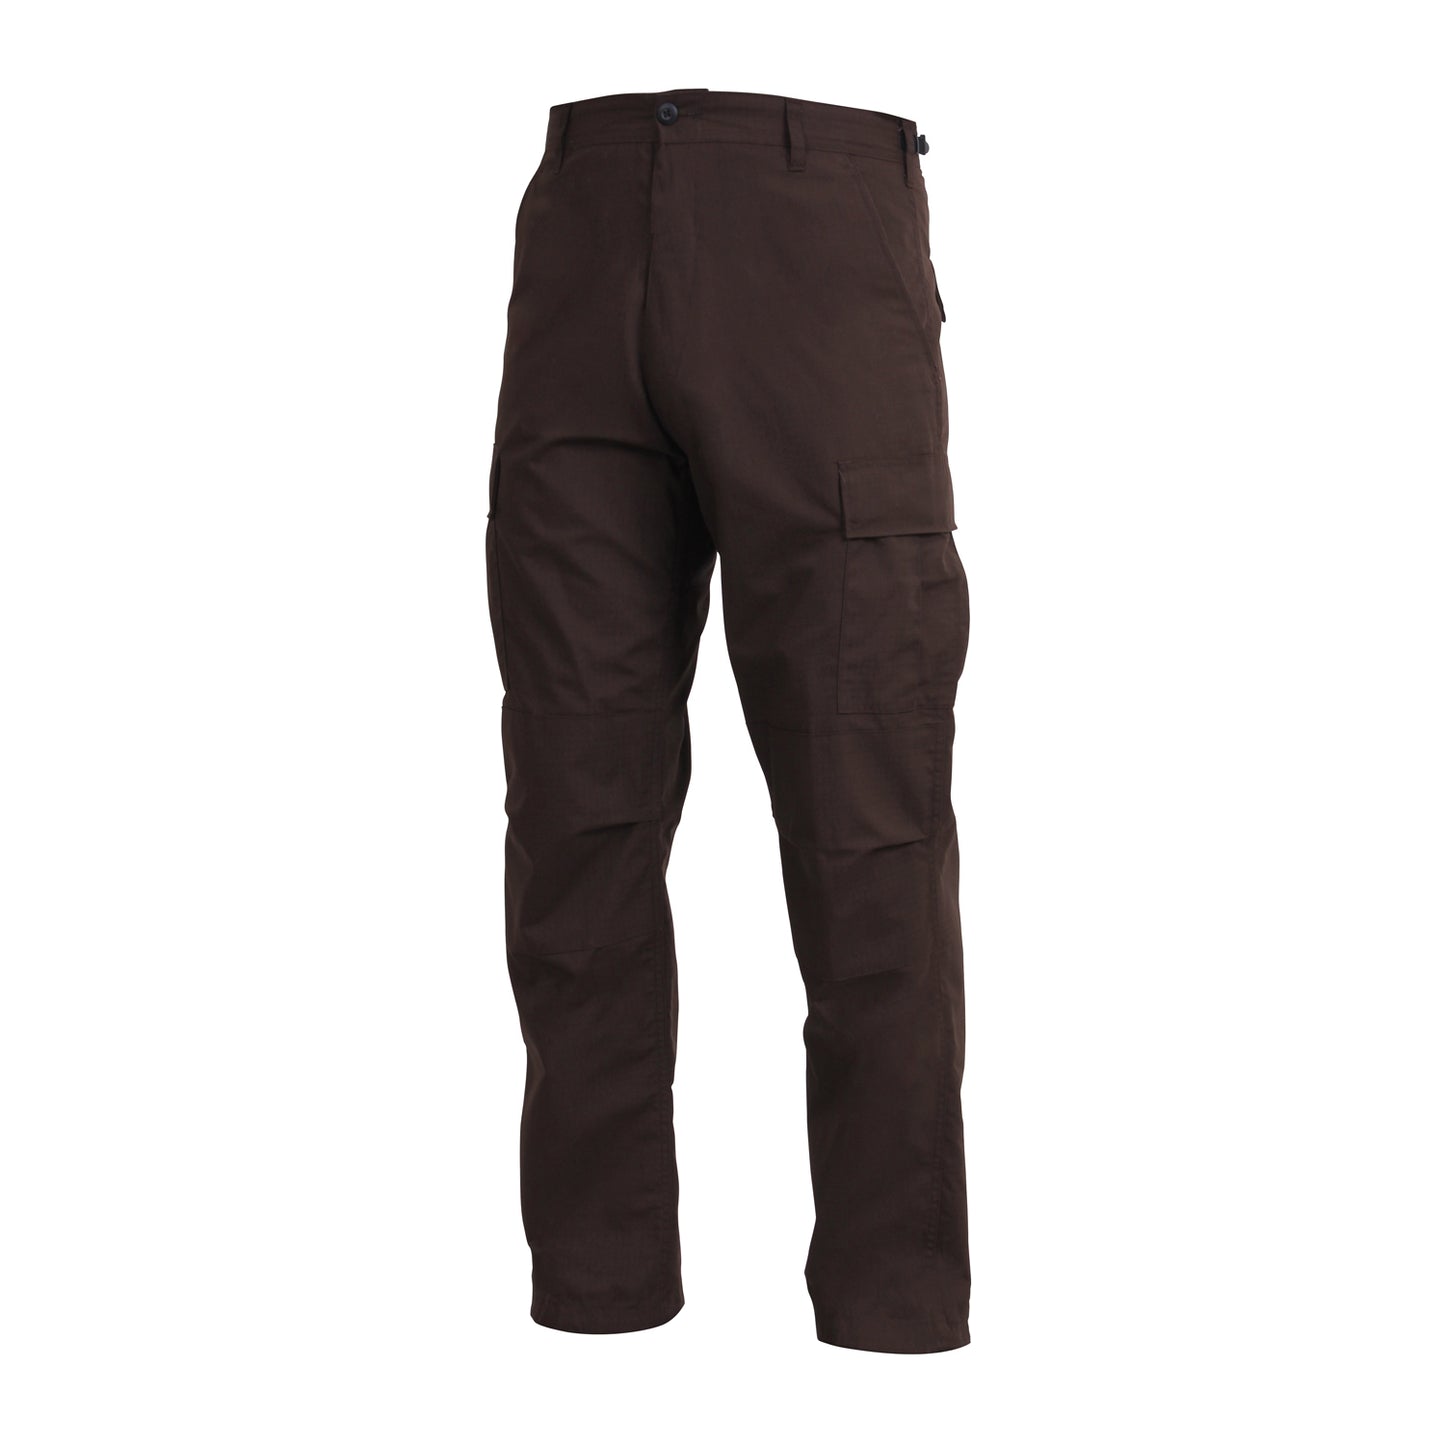 Tactical Swat Cloth BDU Cargo Pants - Rothco Security Uniform Pant